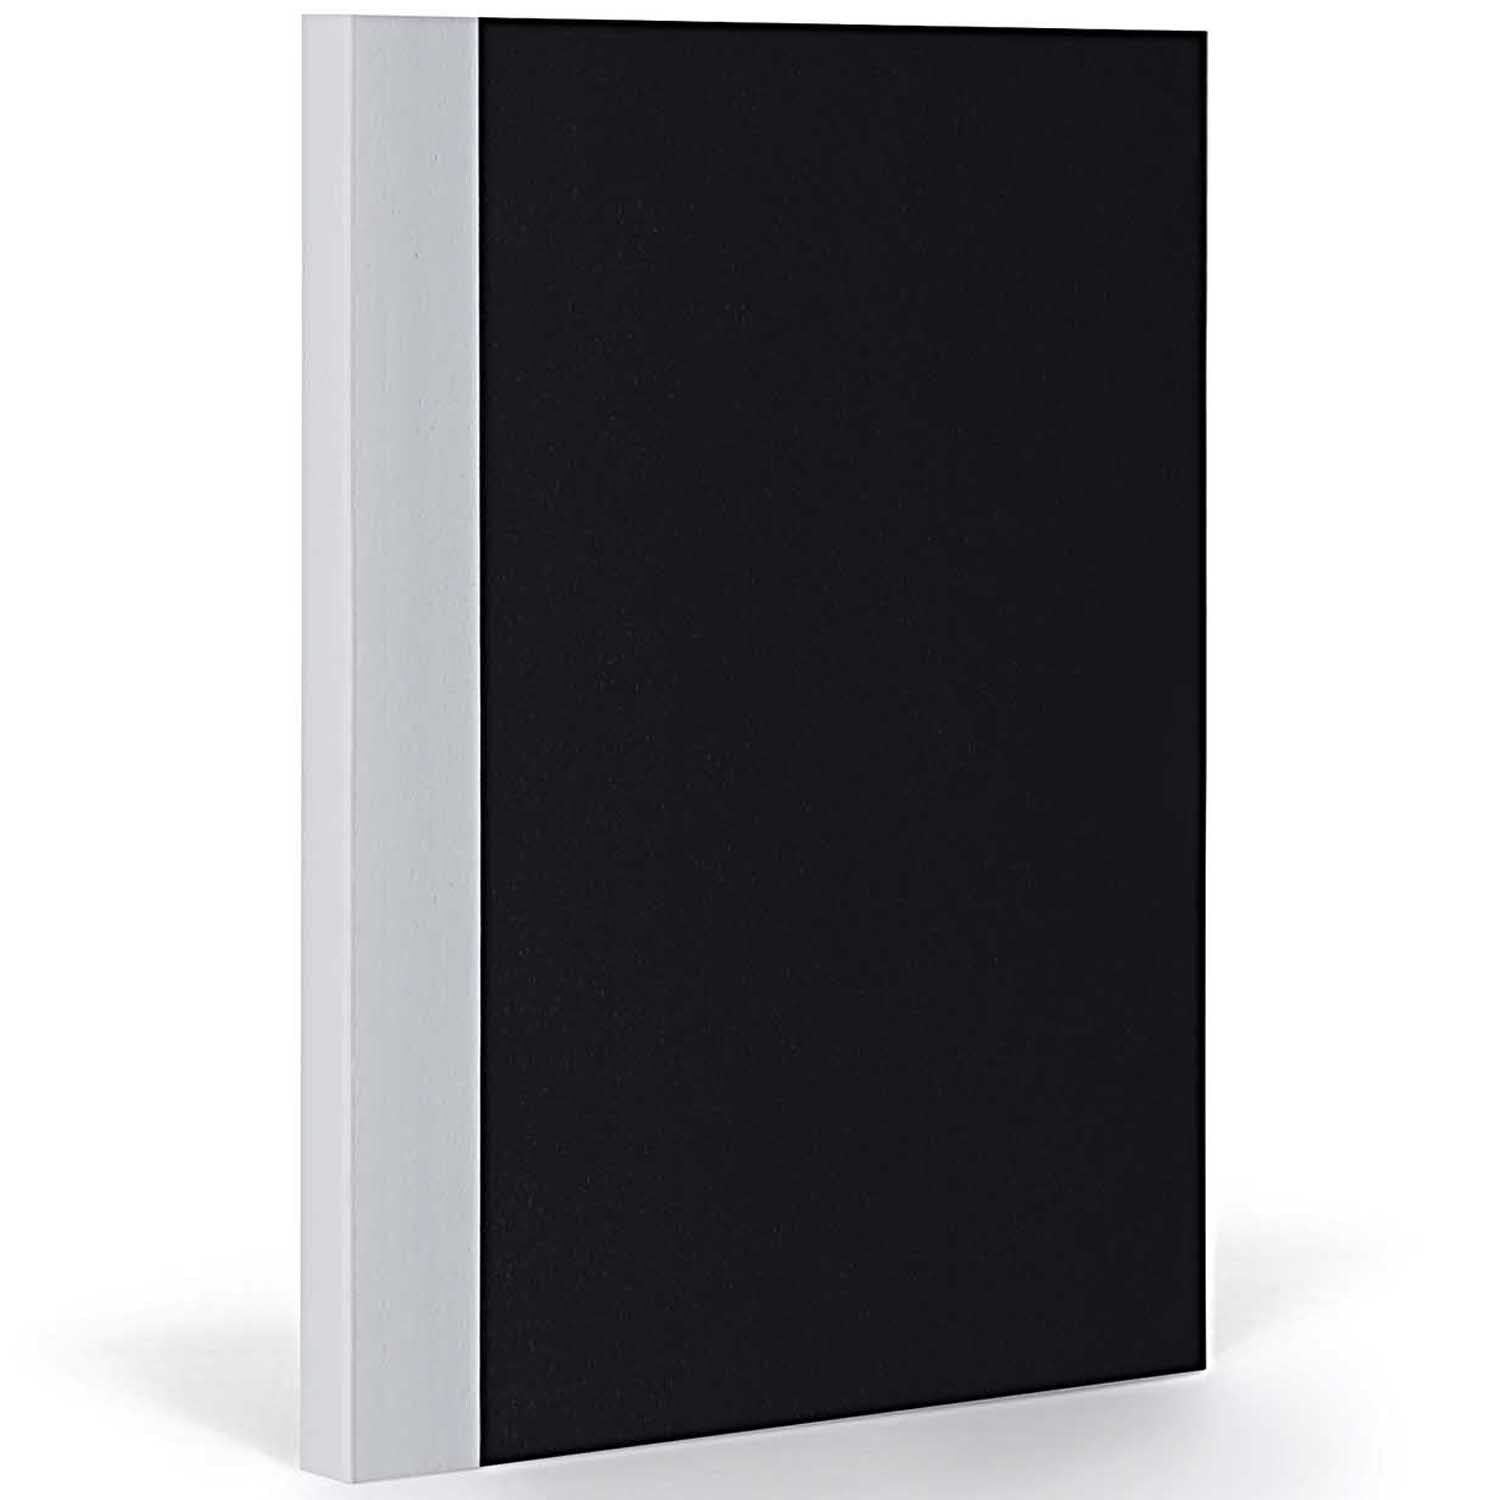 Notizbuch XL blanco black-coolgrey